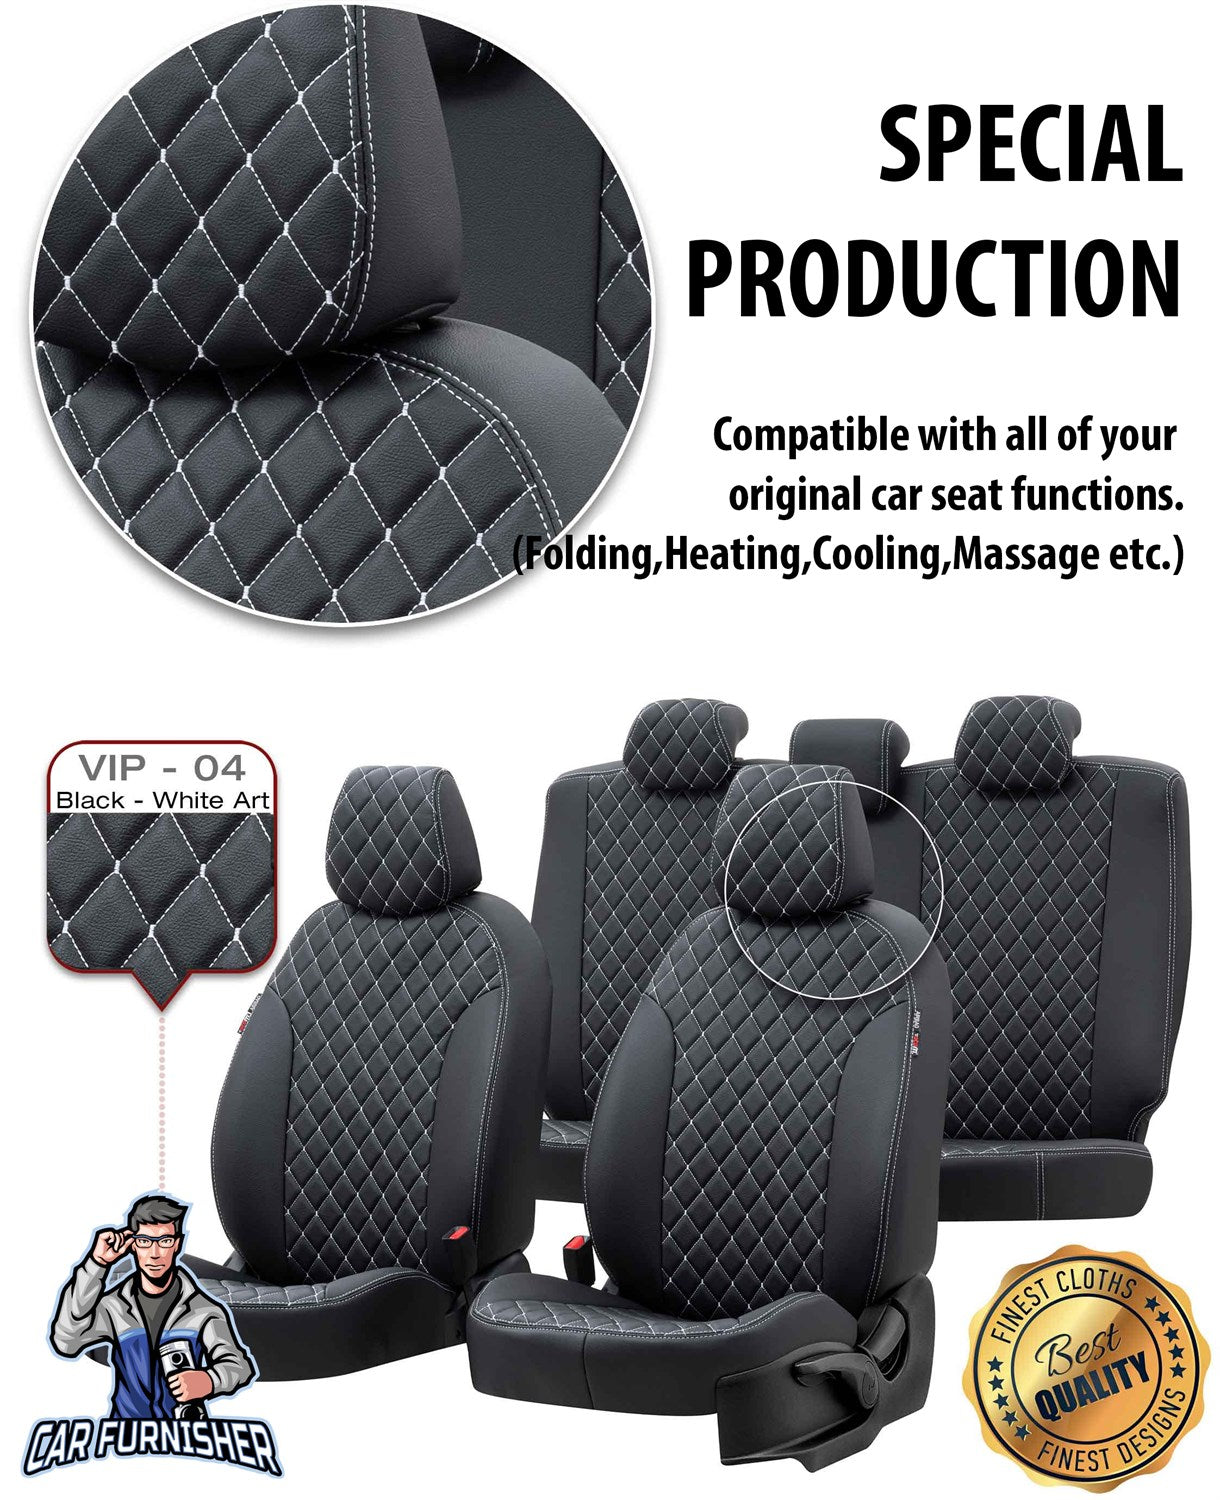 Dacia Sandero Seat Covers Madrid Leather Design Beige Leather